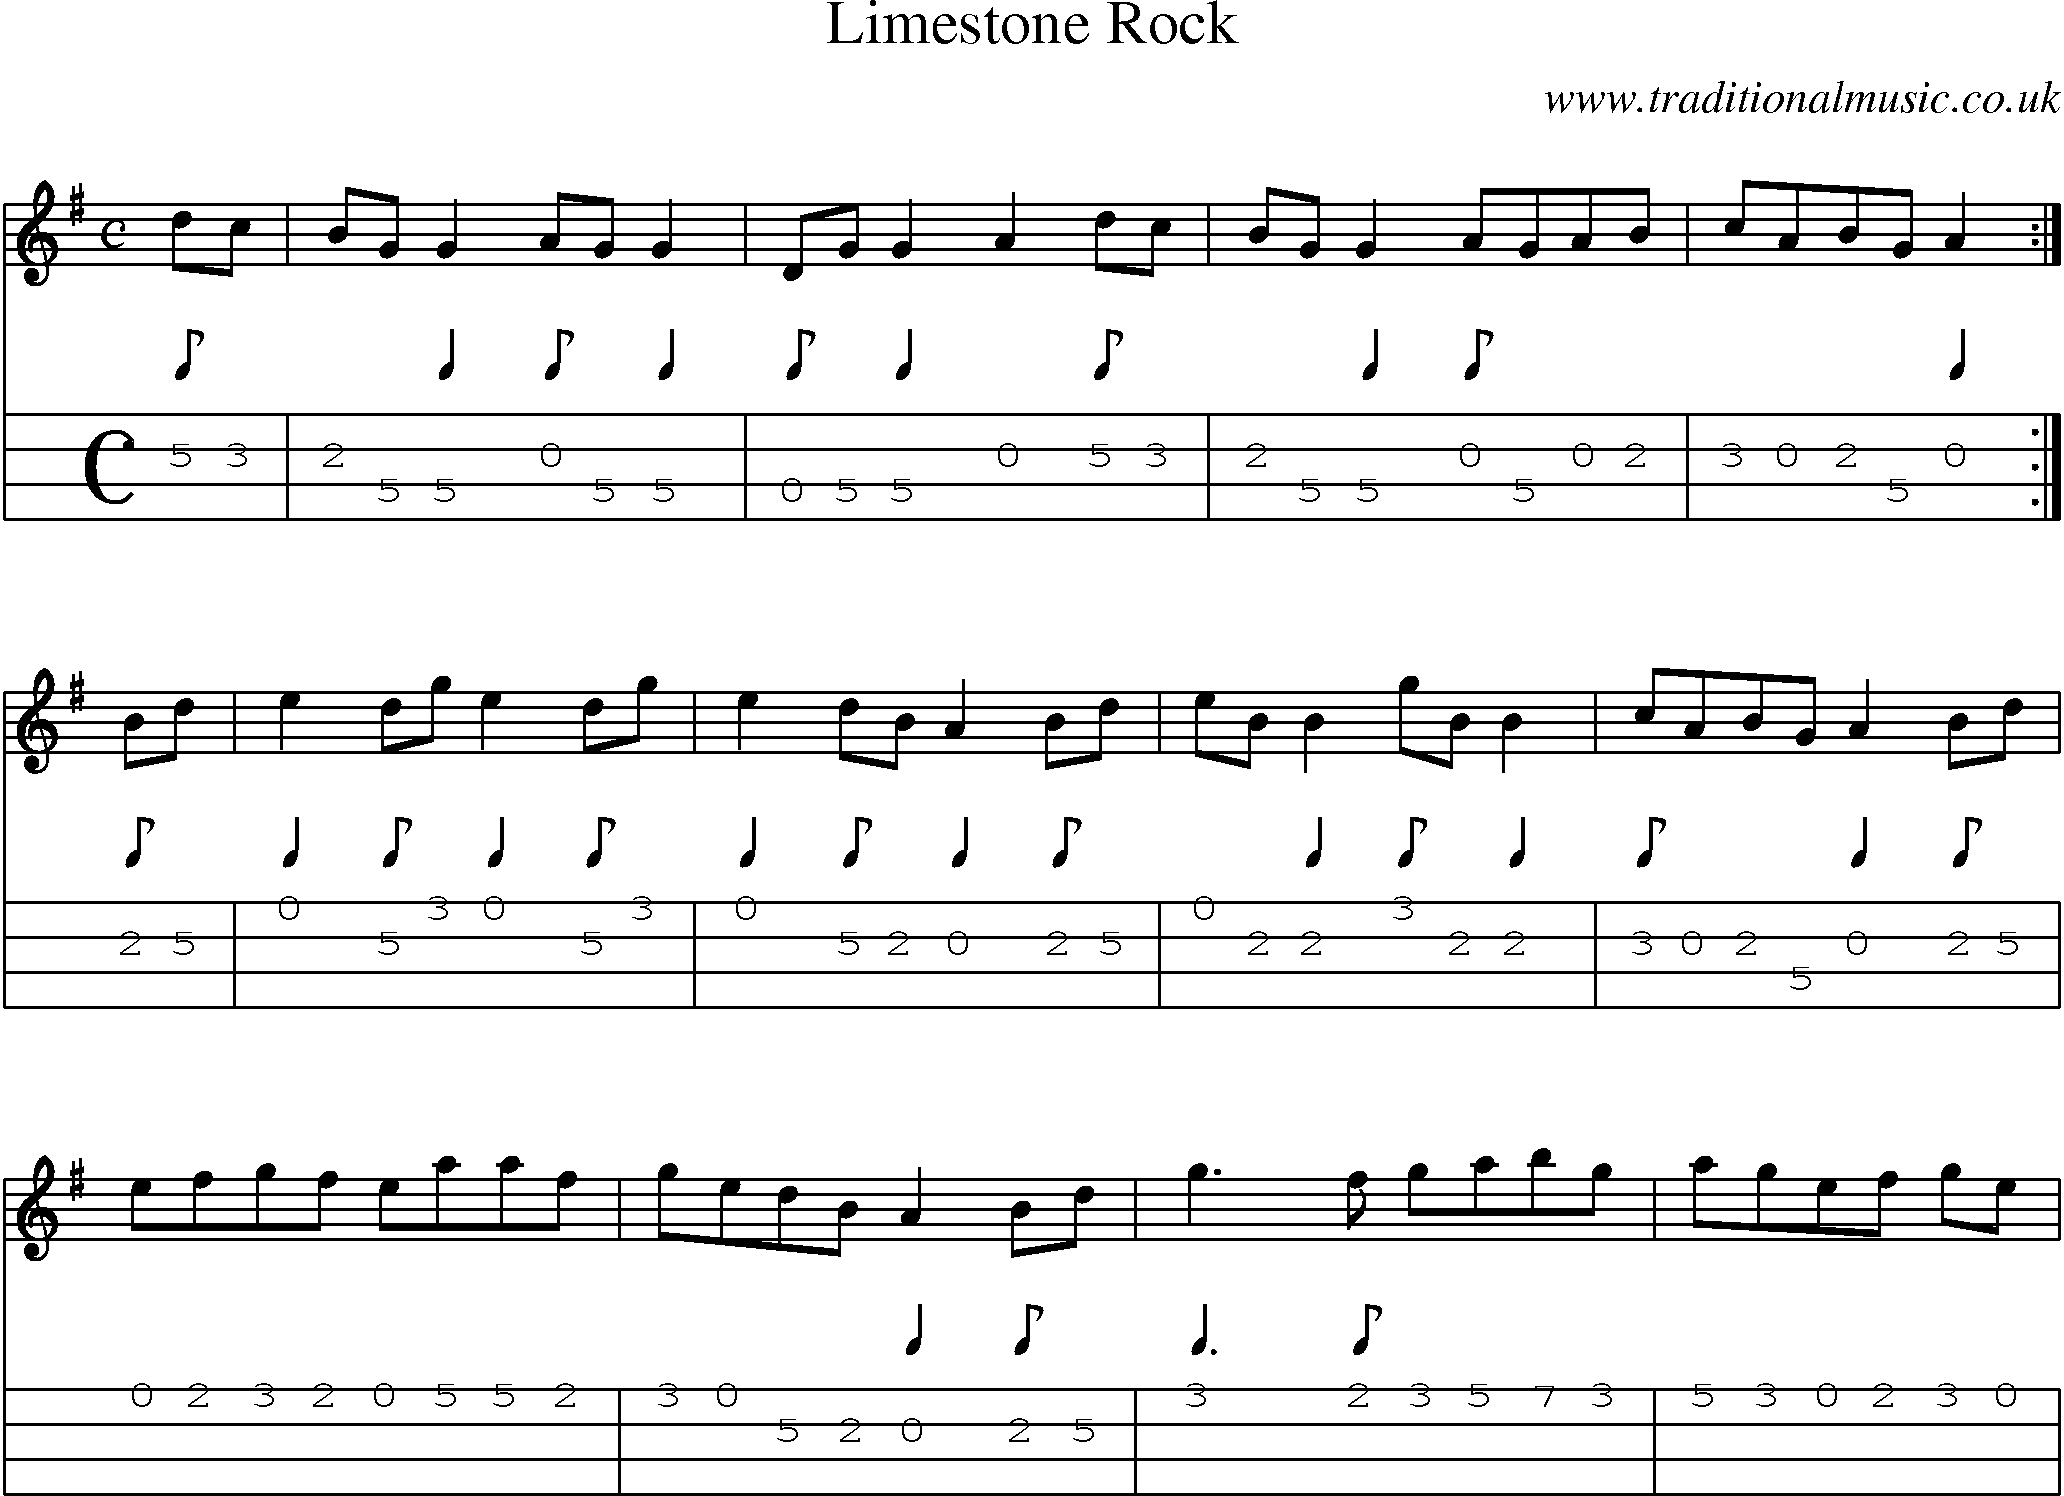 Music Score and Mandolin Tabs for Limestone Rock